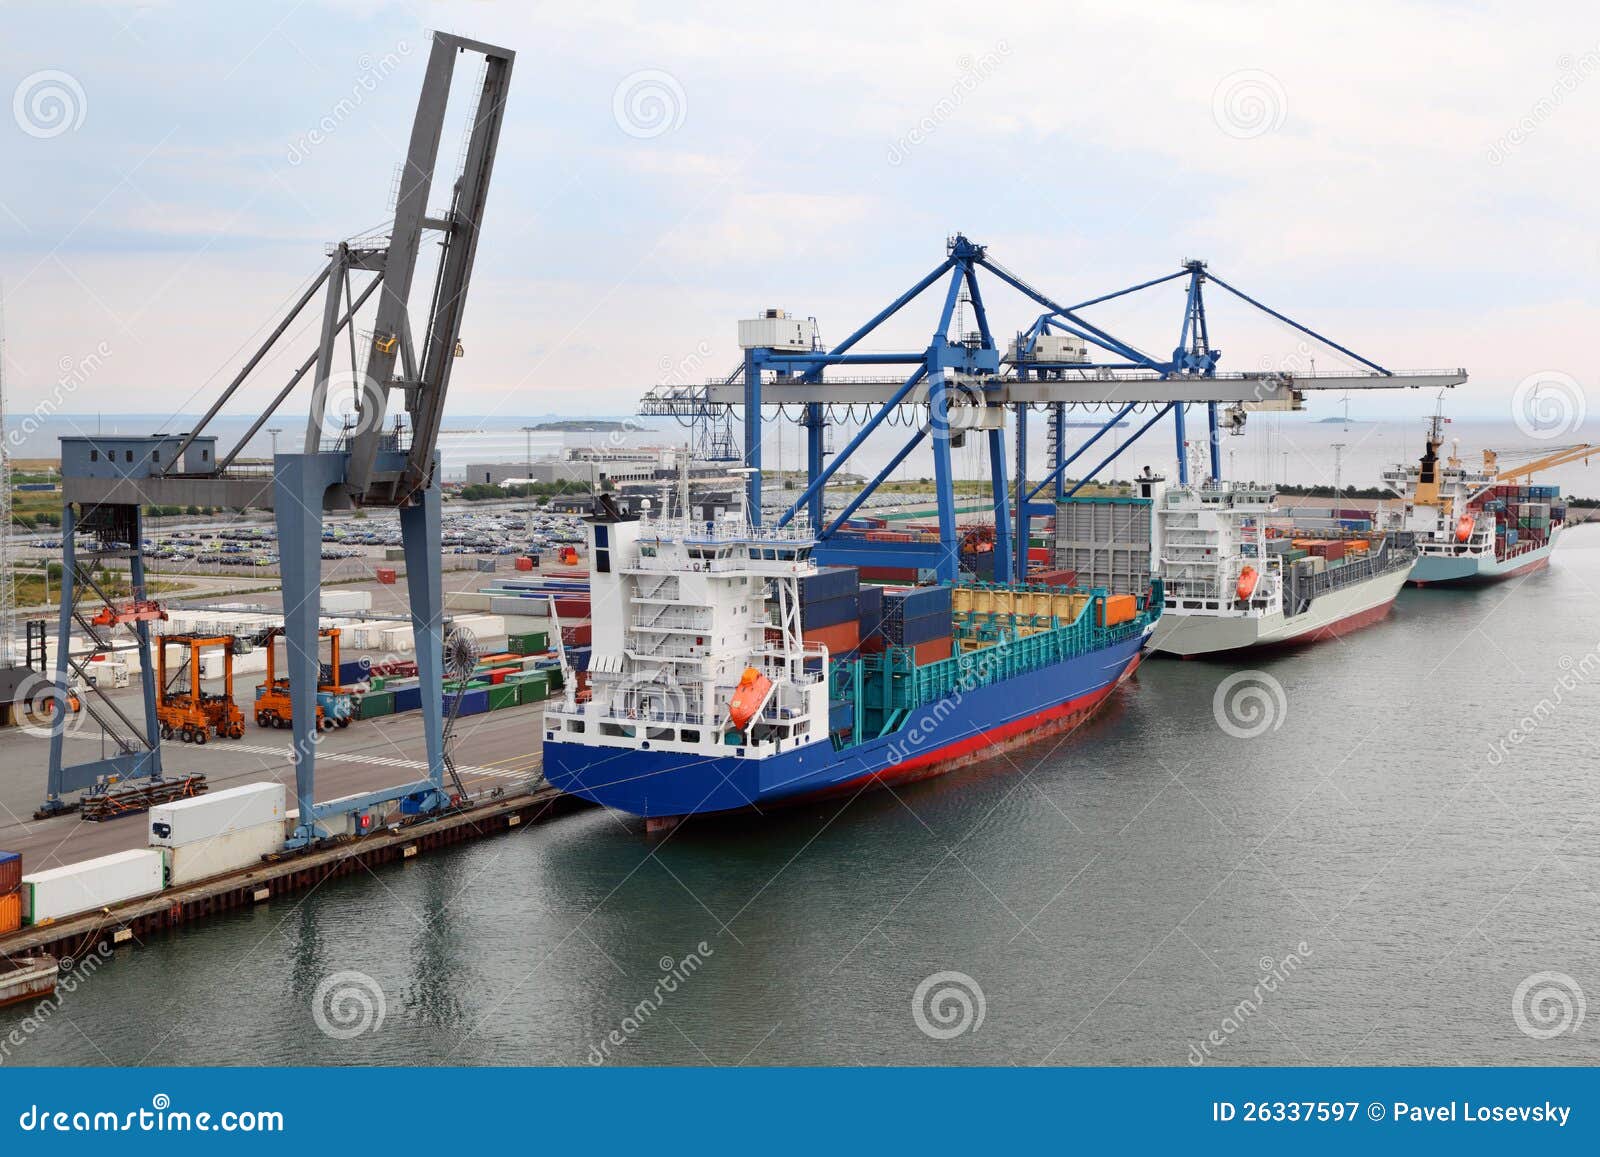 cargo ships in copenhagen seaport